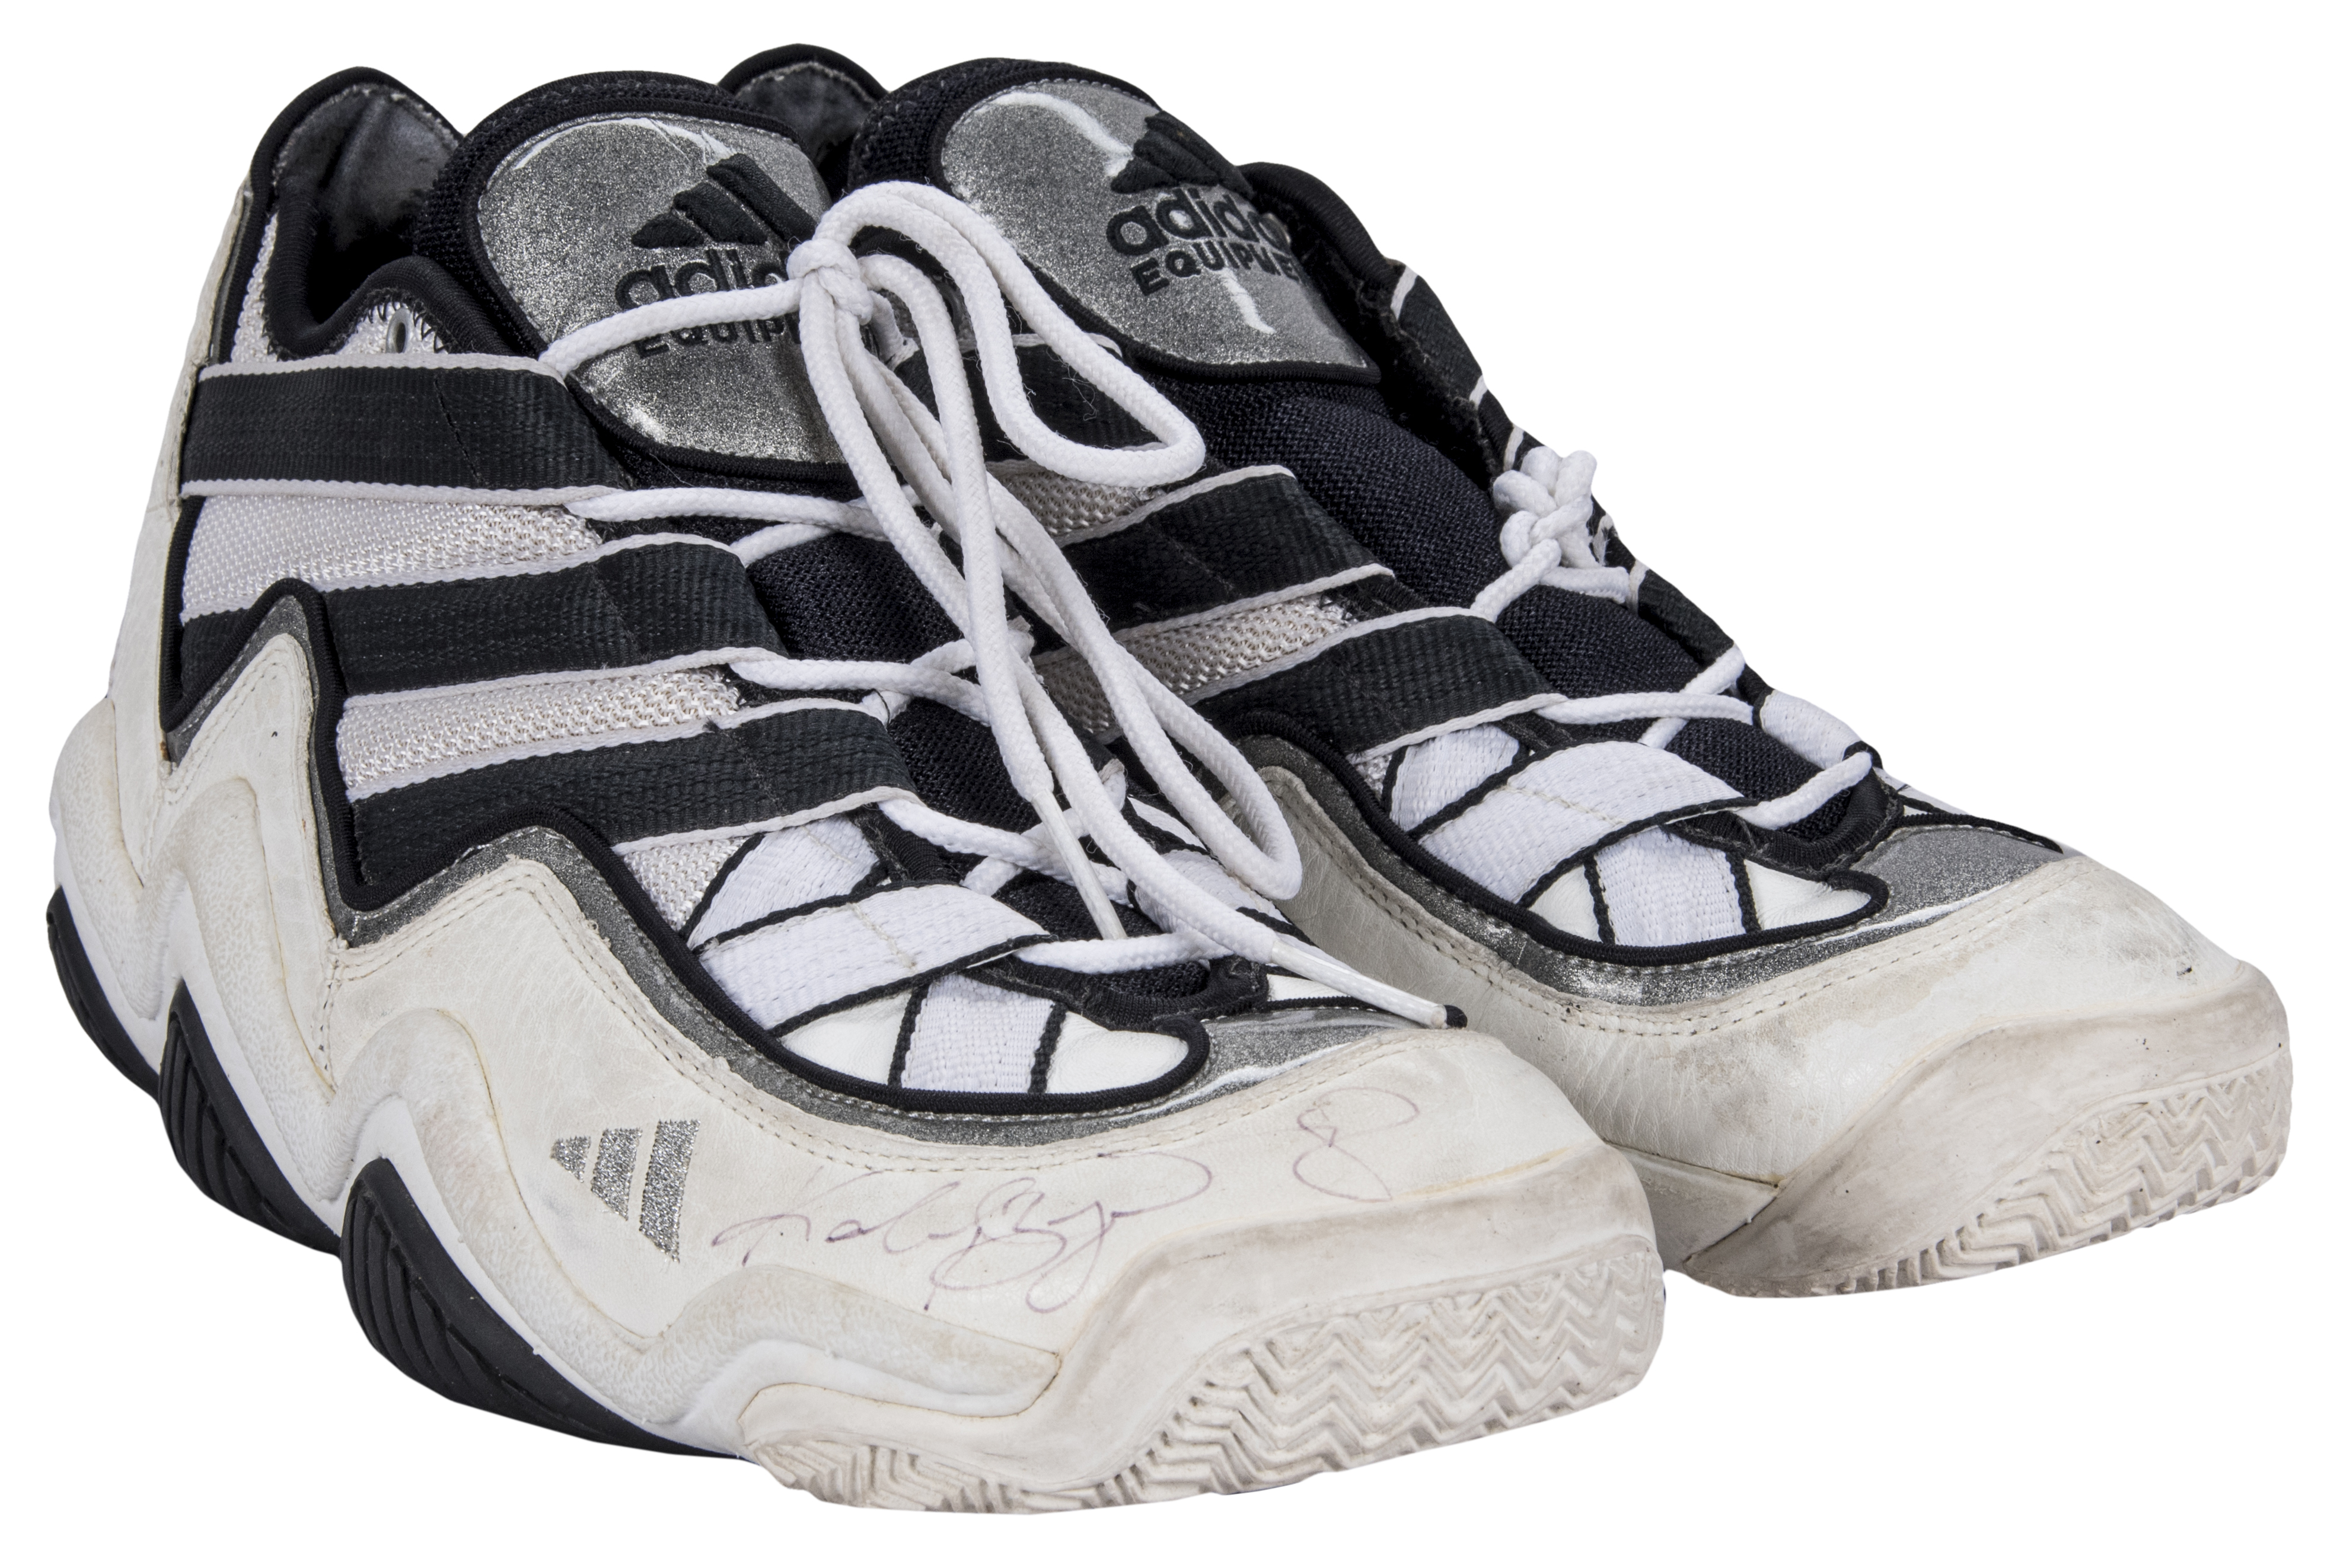 kobe bryant adidas rookie shoes